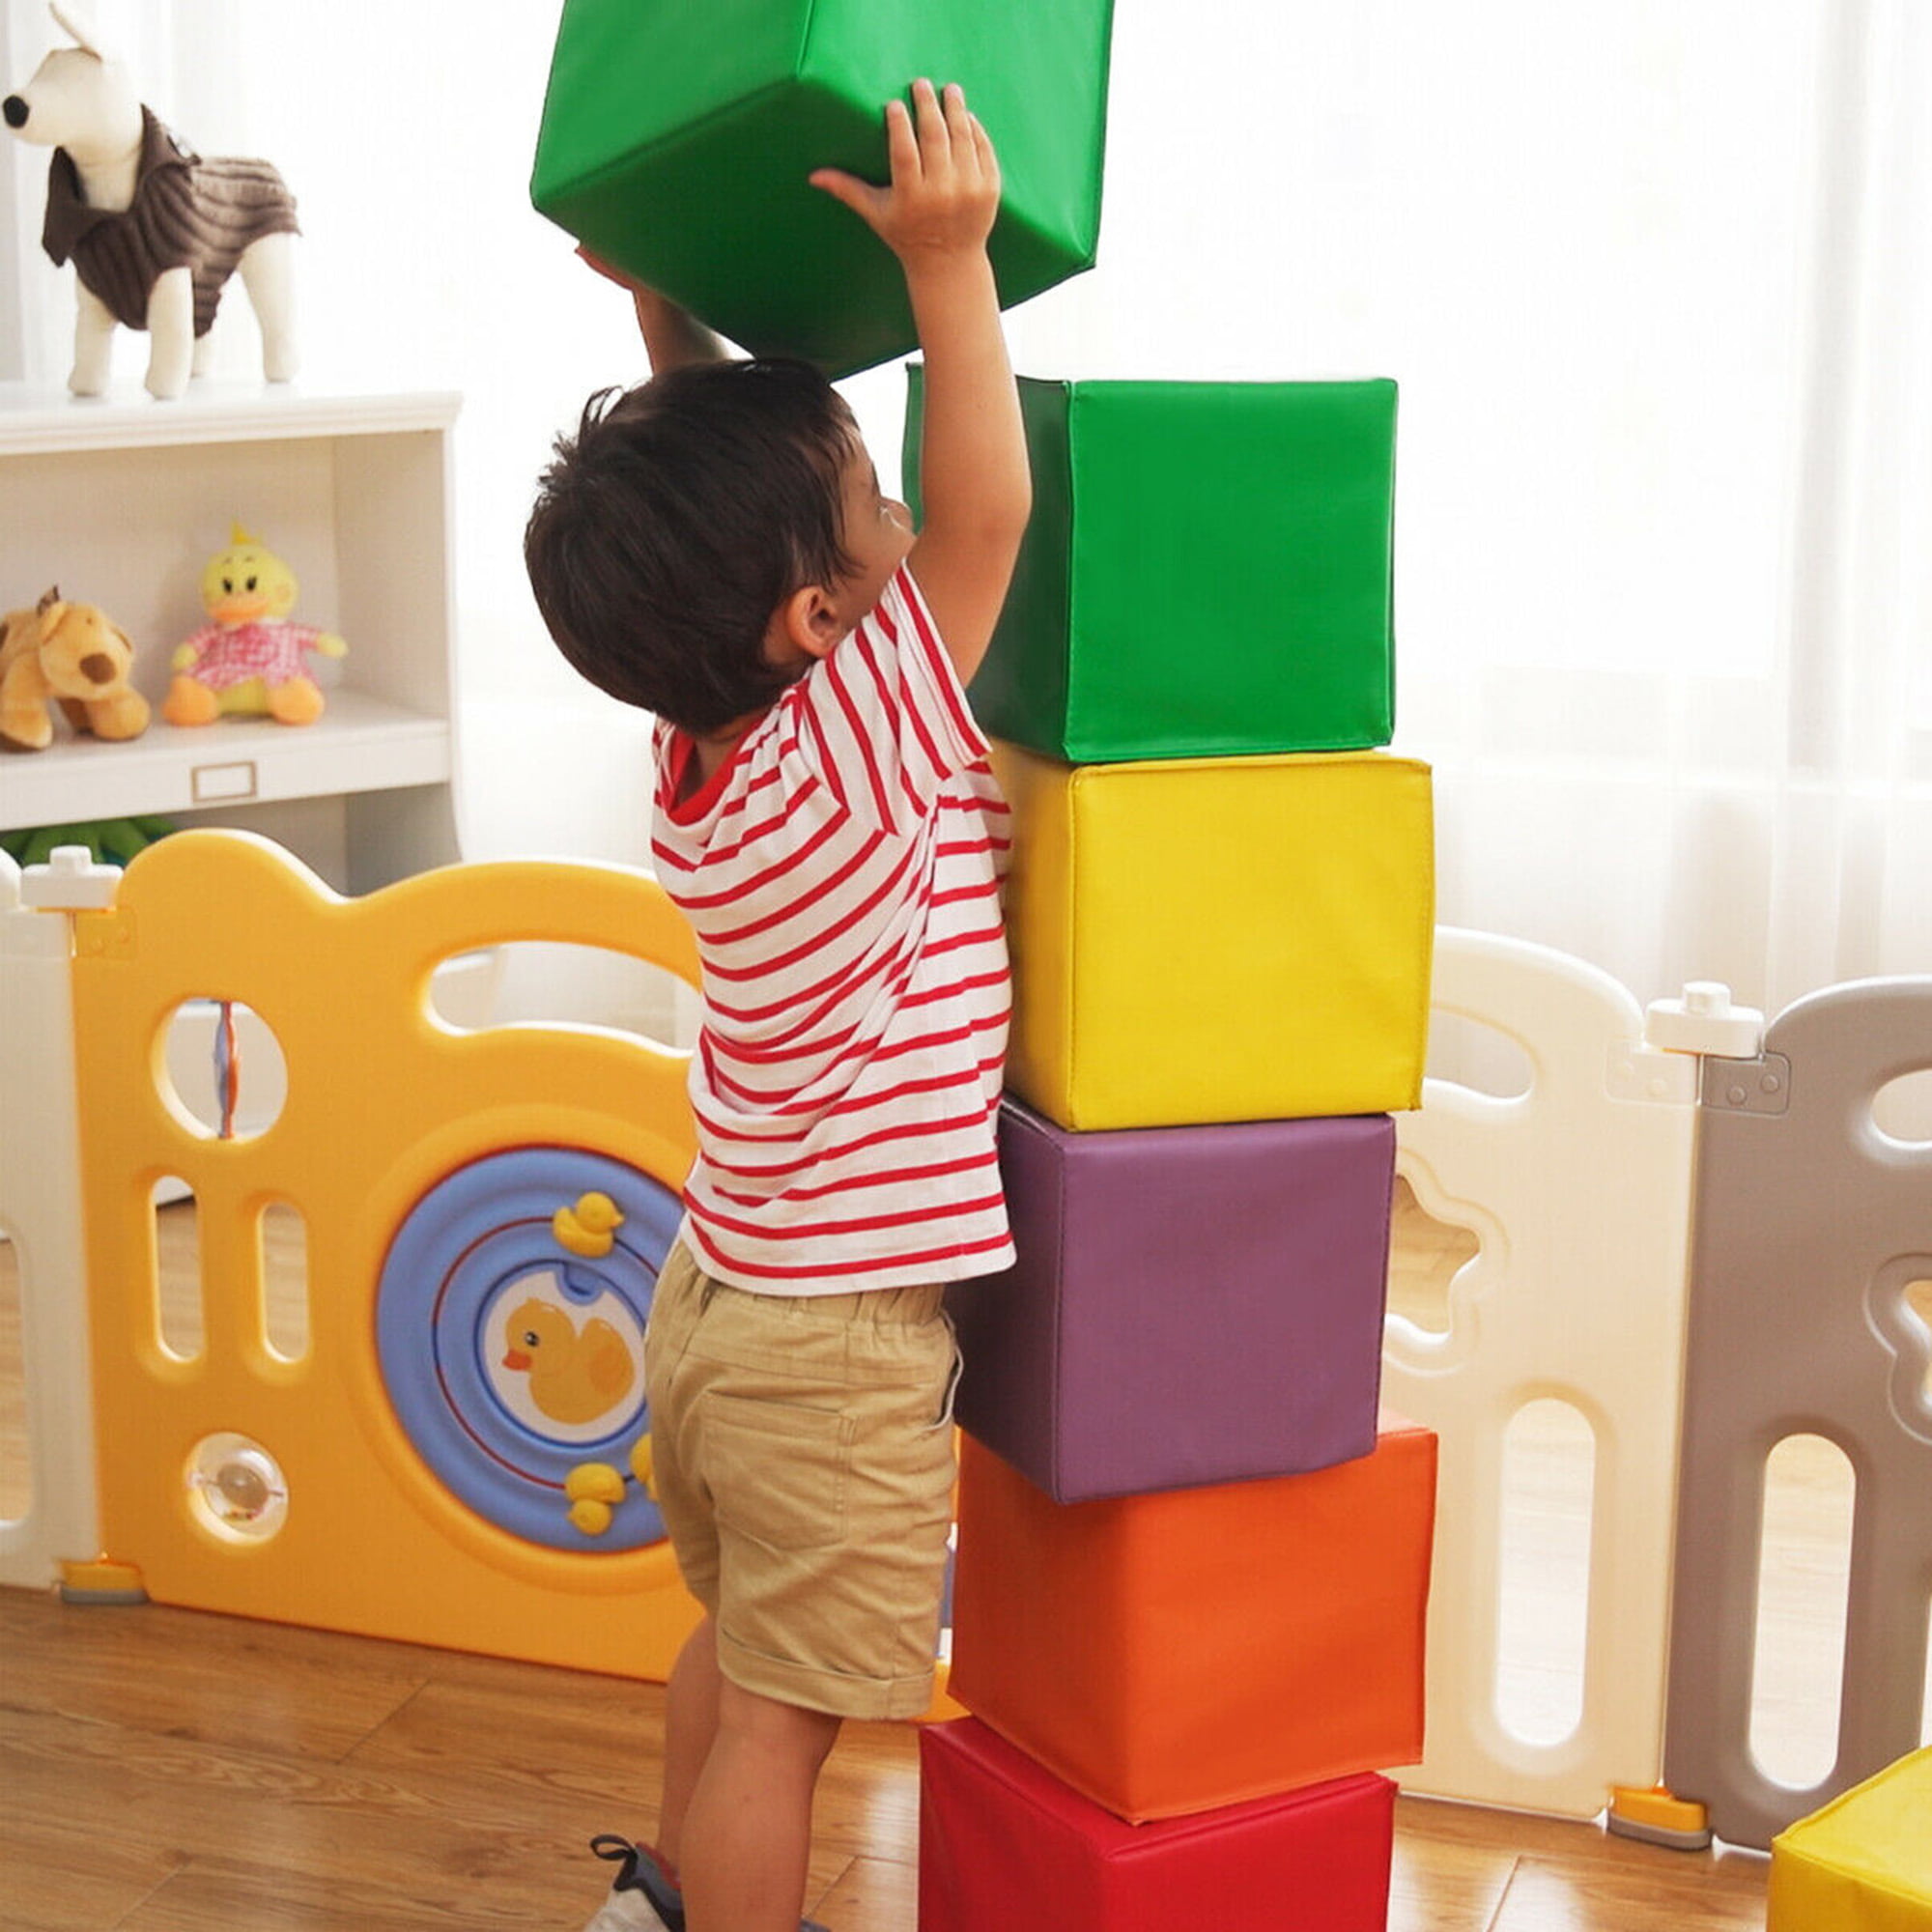 Soft Children Building Brick Block Safe Foam Construction Toy Kids Gift HS3 